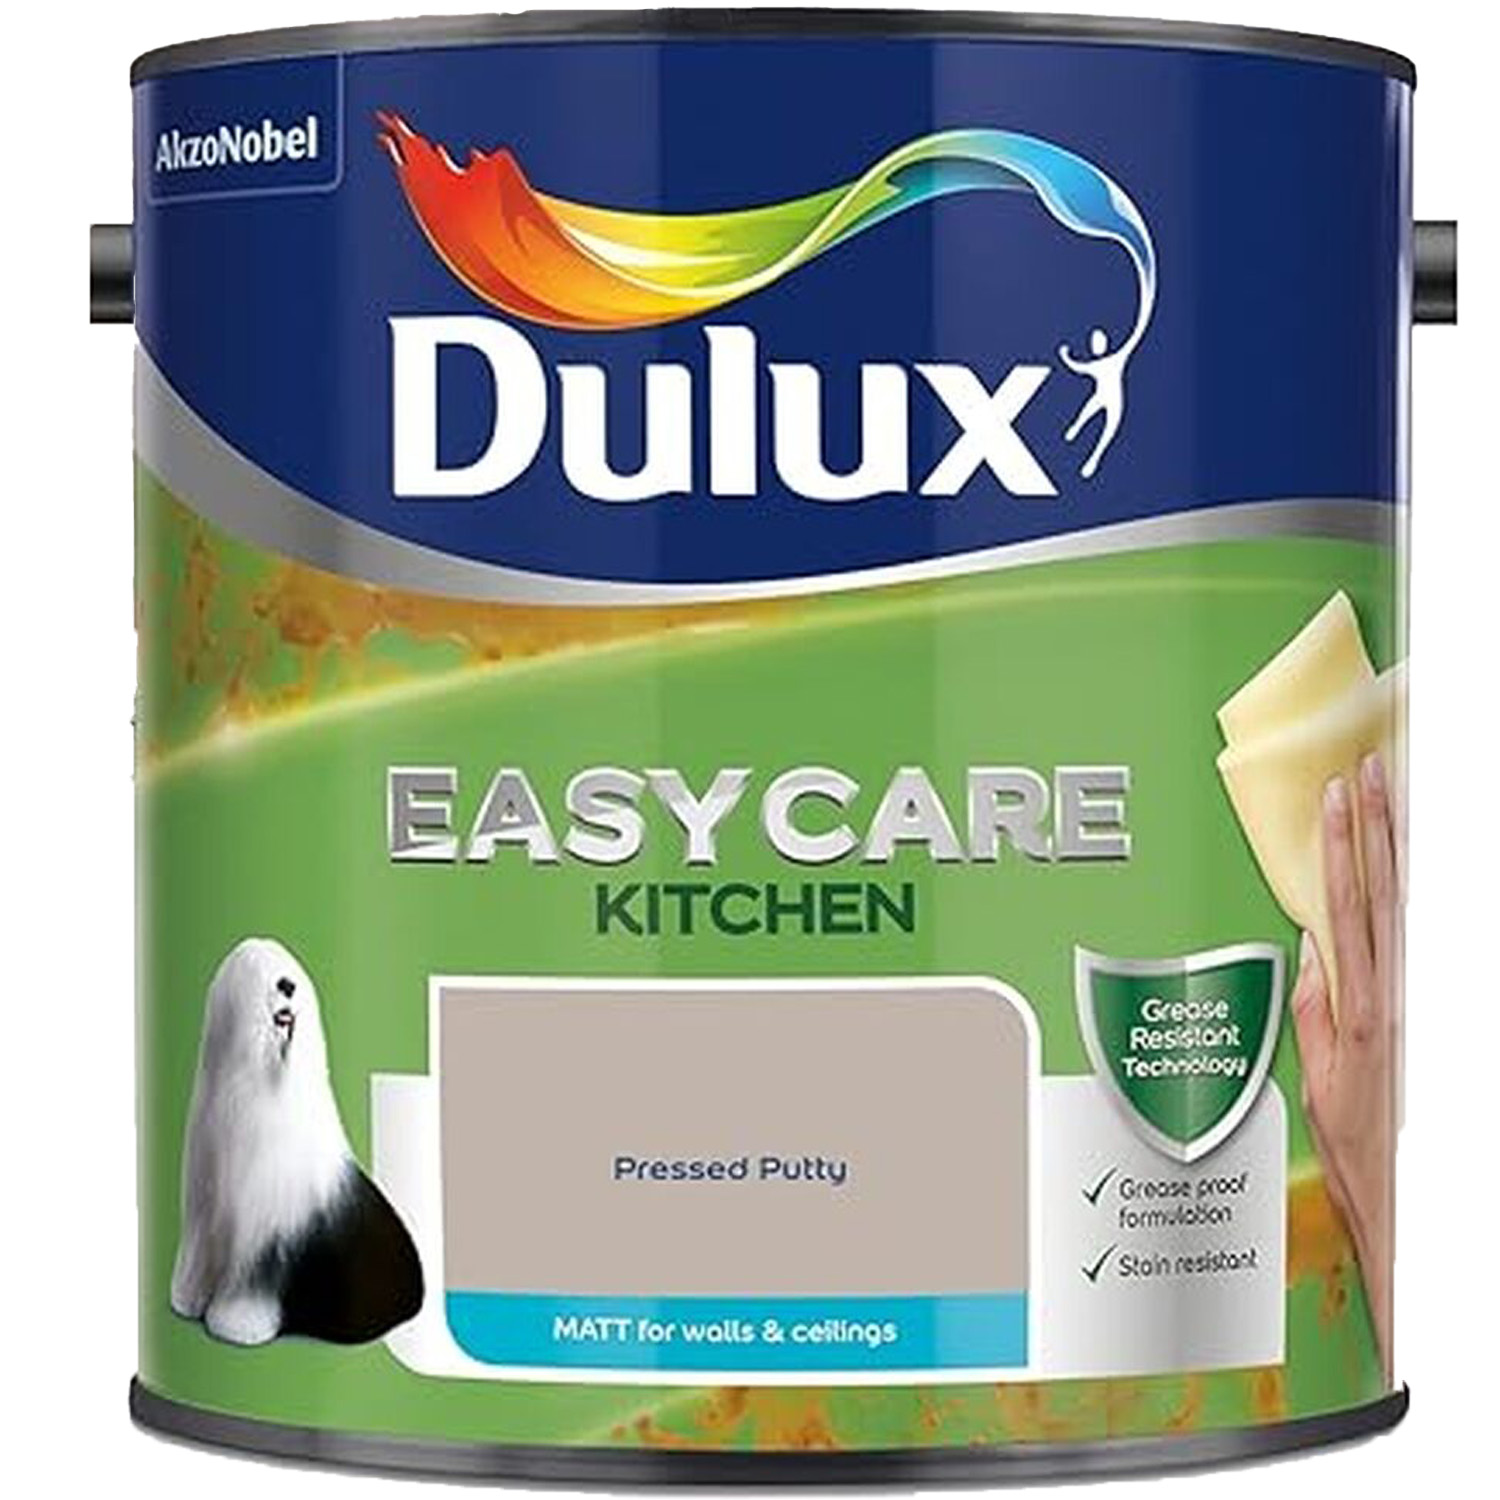 Dulux Easycare Kitchen Pressed Putty Matt Emulsion Paint 2.5L Image 2